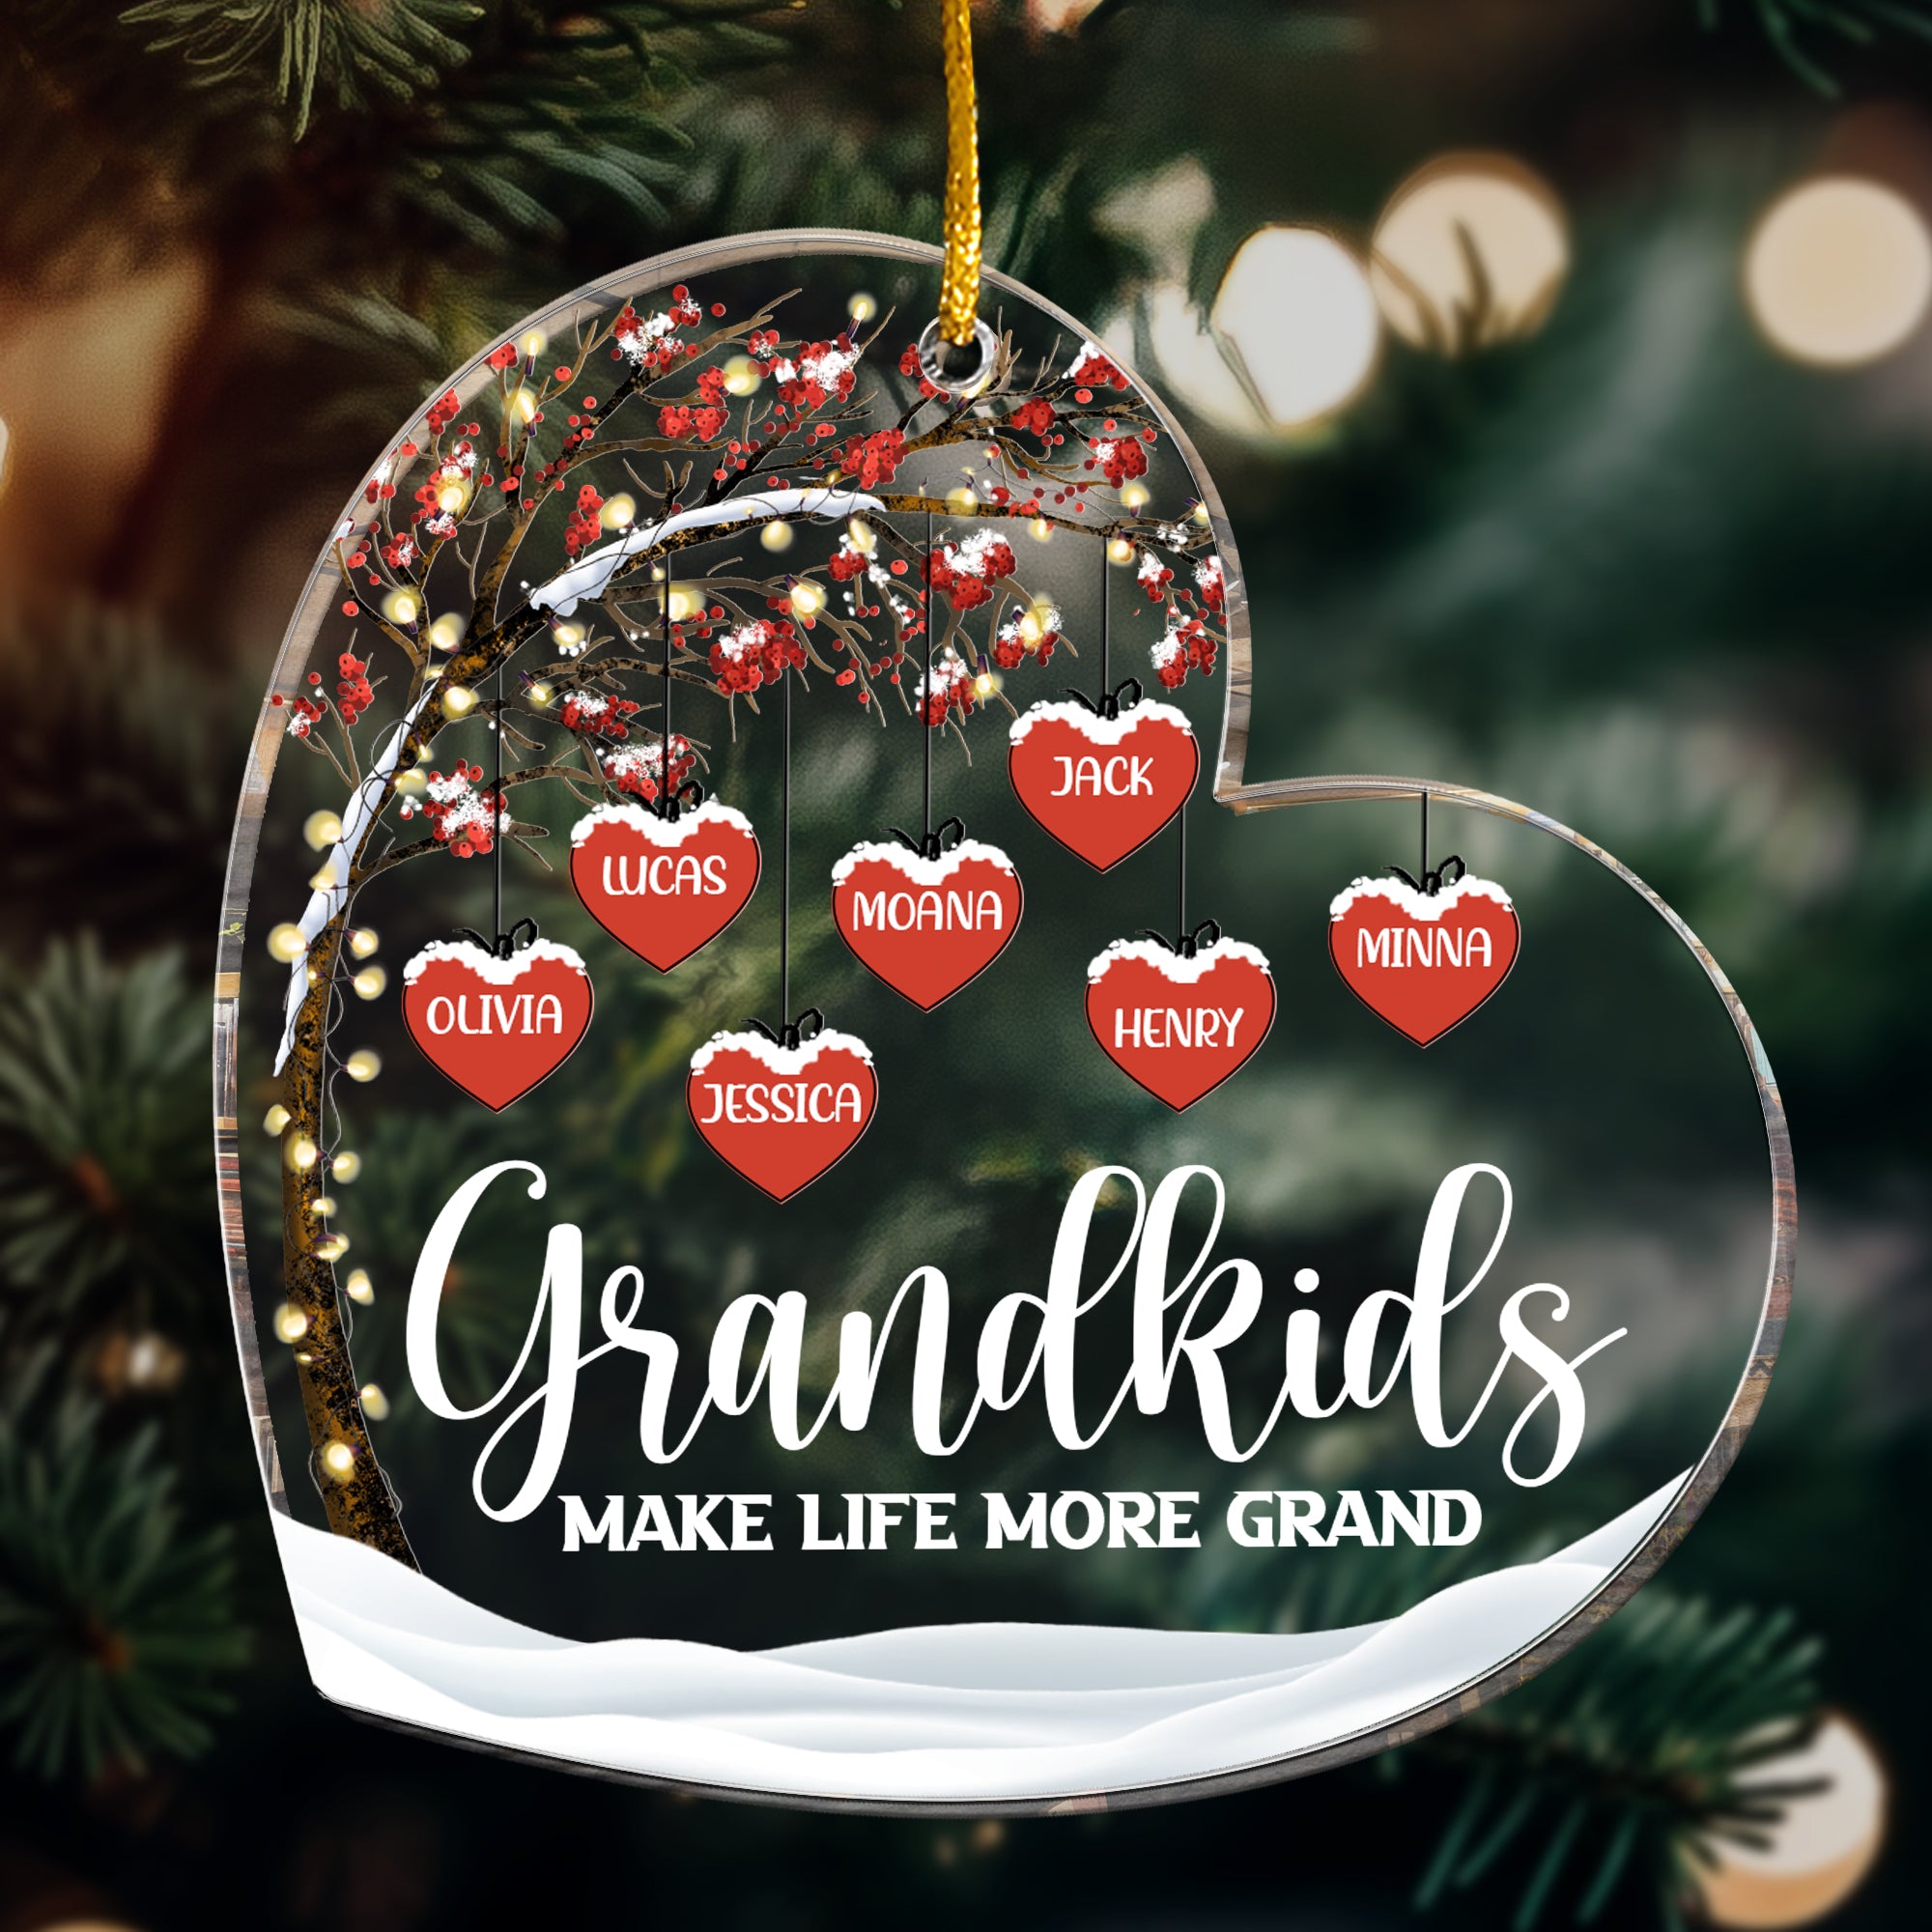 Grandkids Make Life More Grand - Personalized Acrylic Ornament